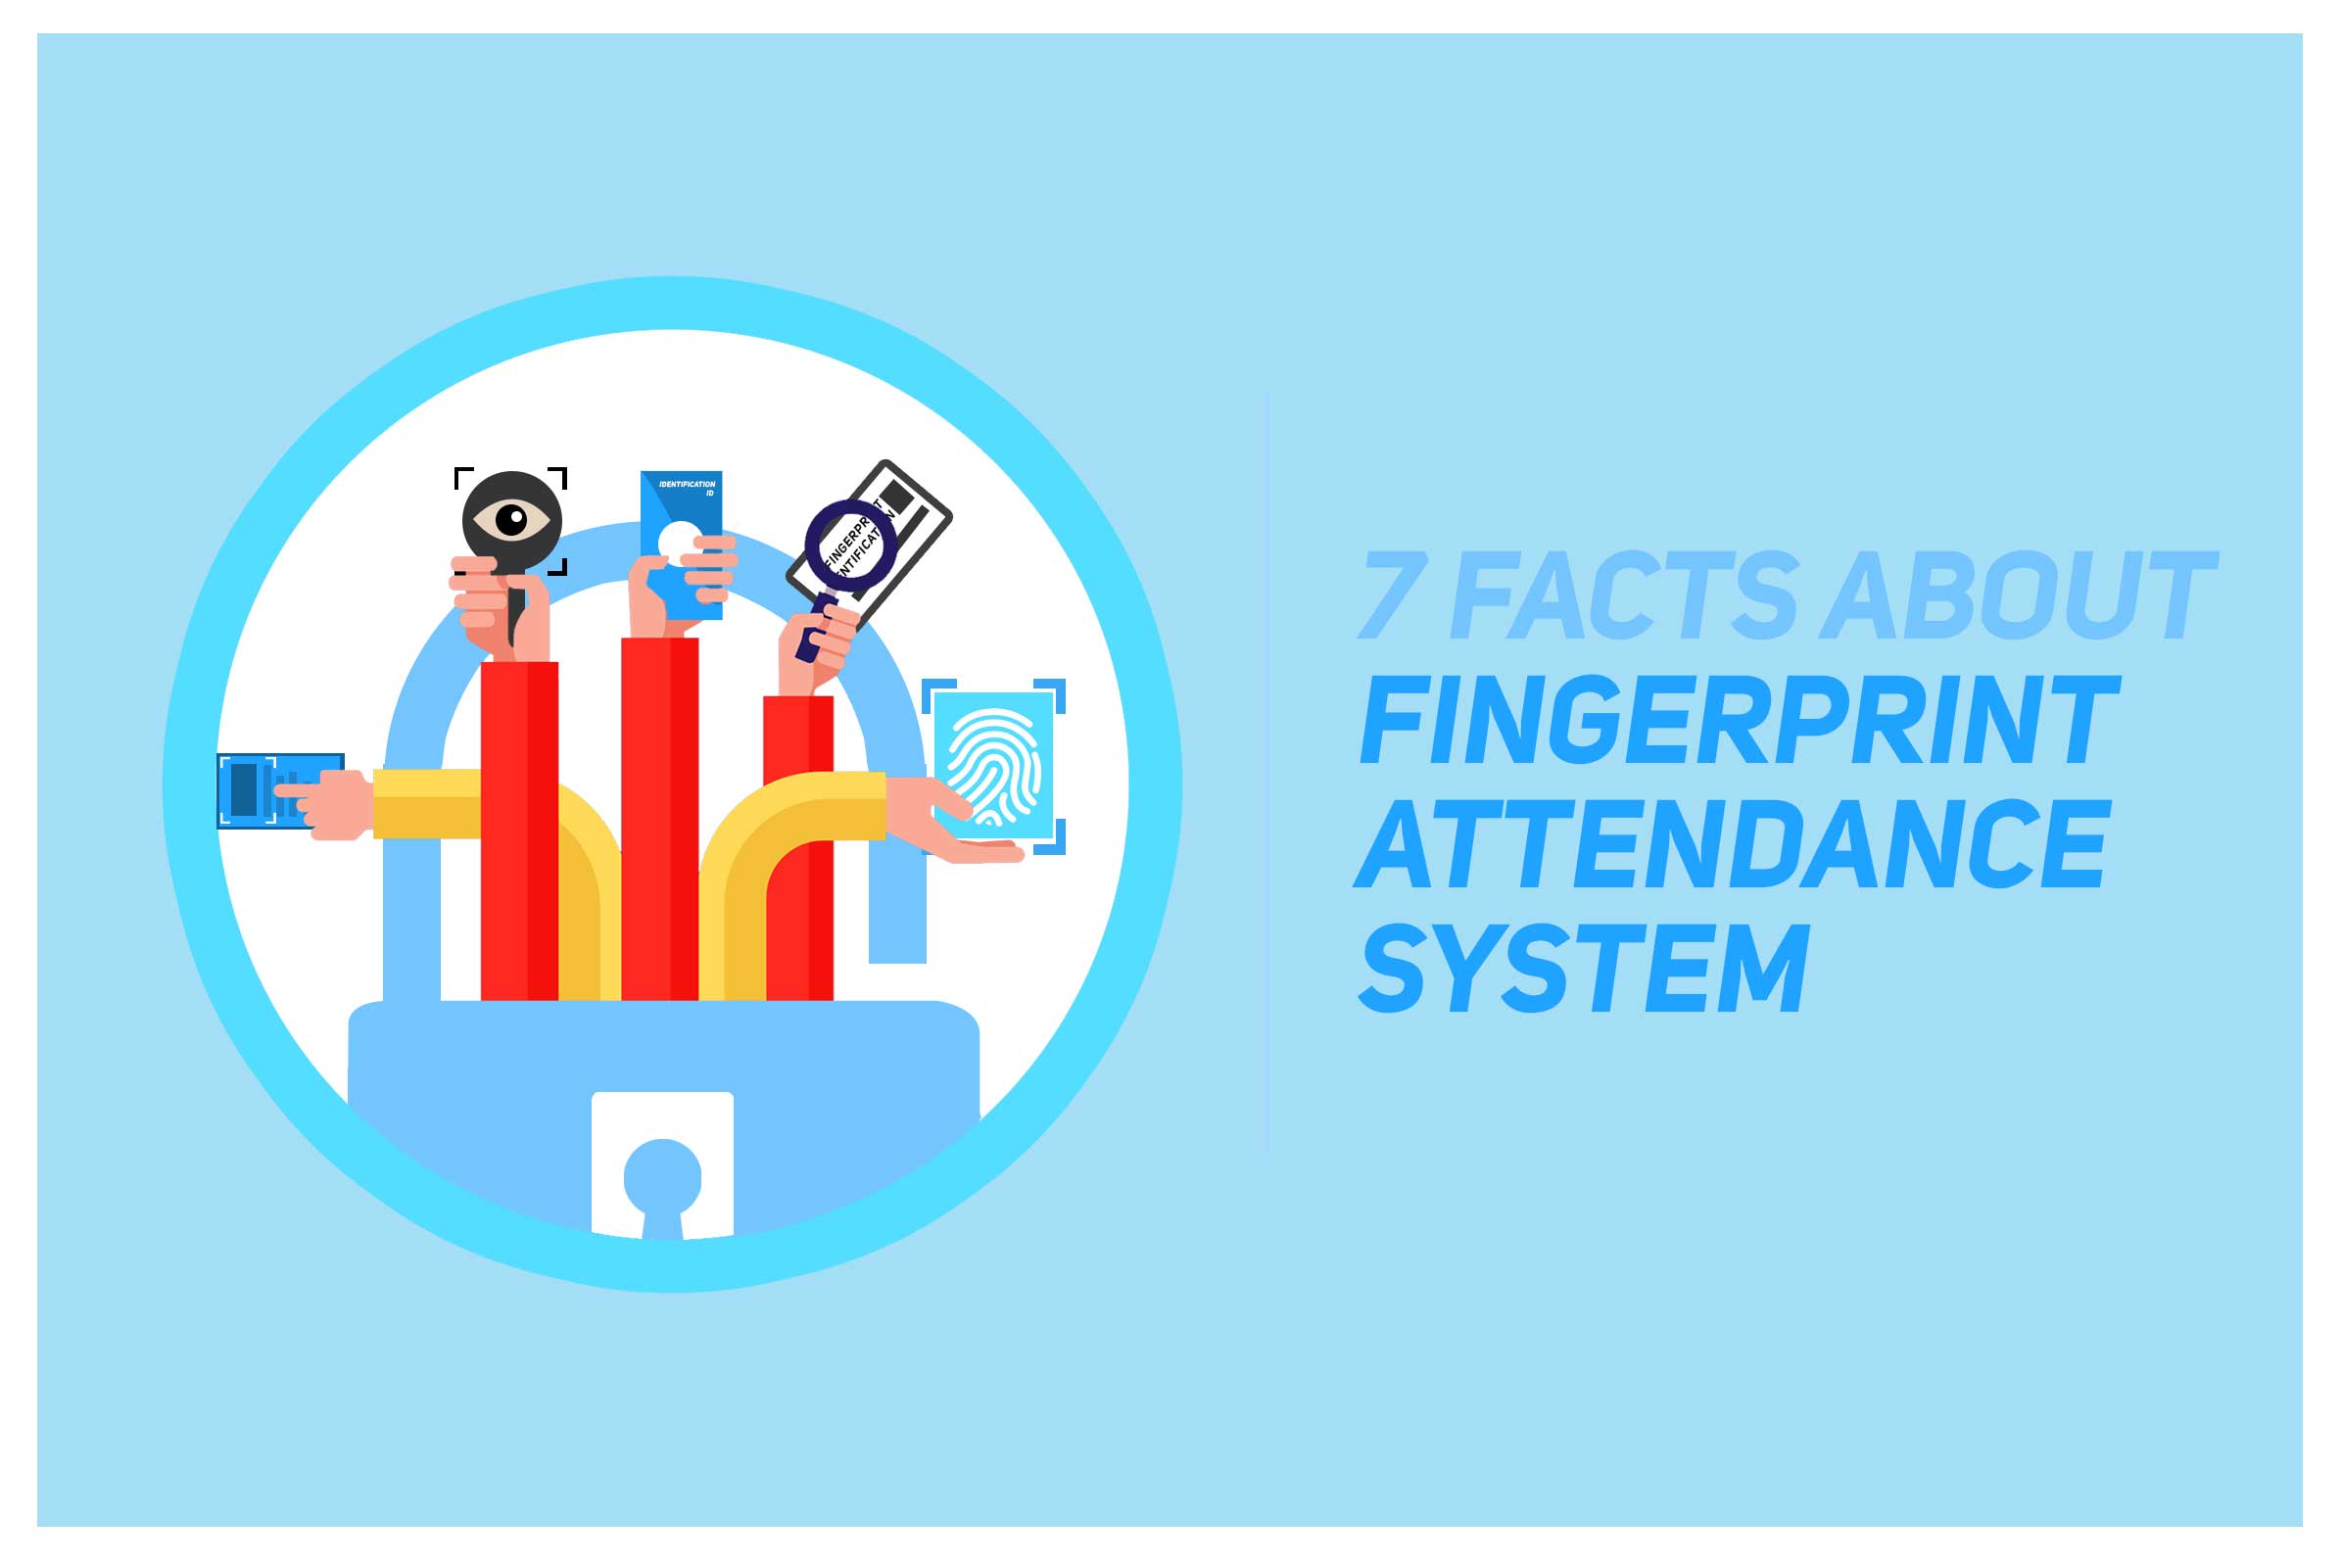 7 Facts About Fingerprint Attendance Systems